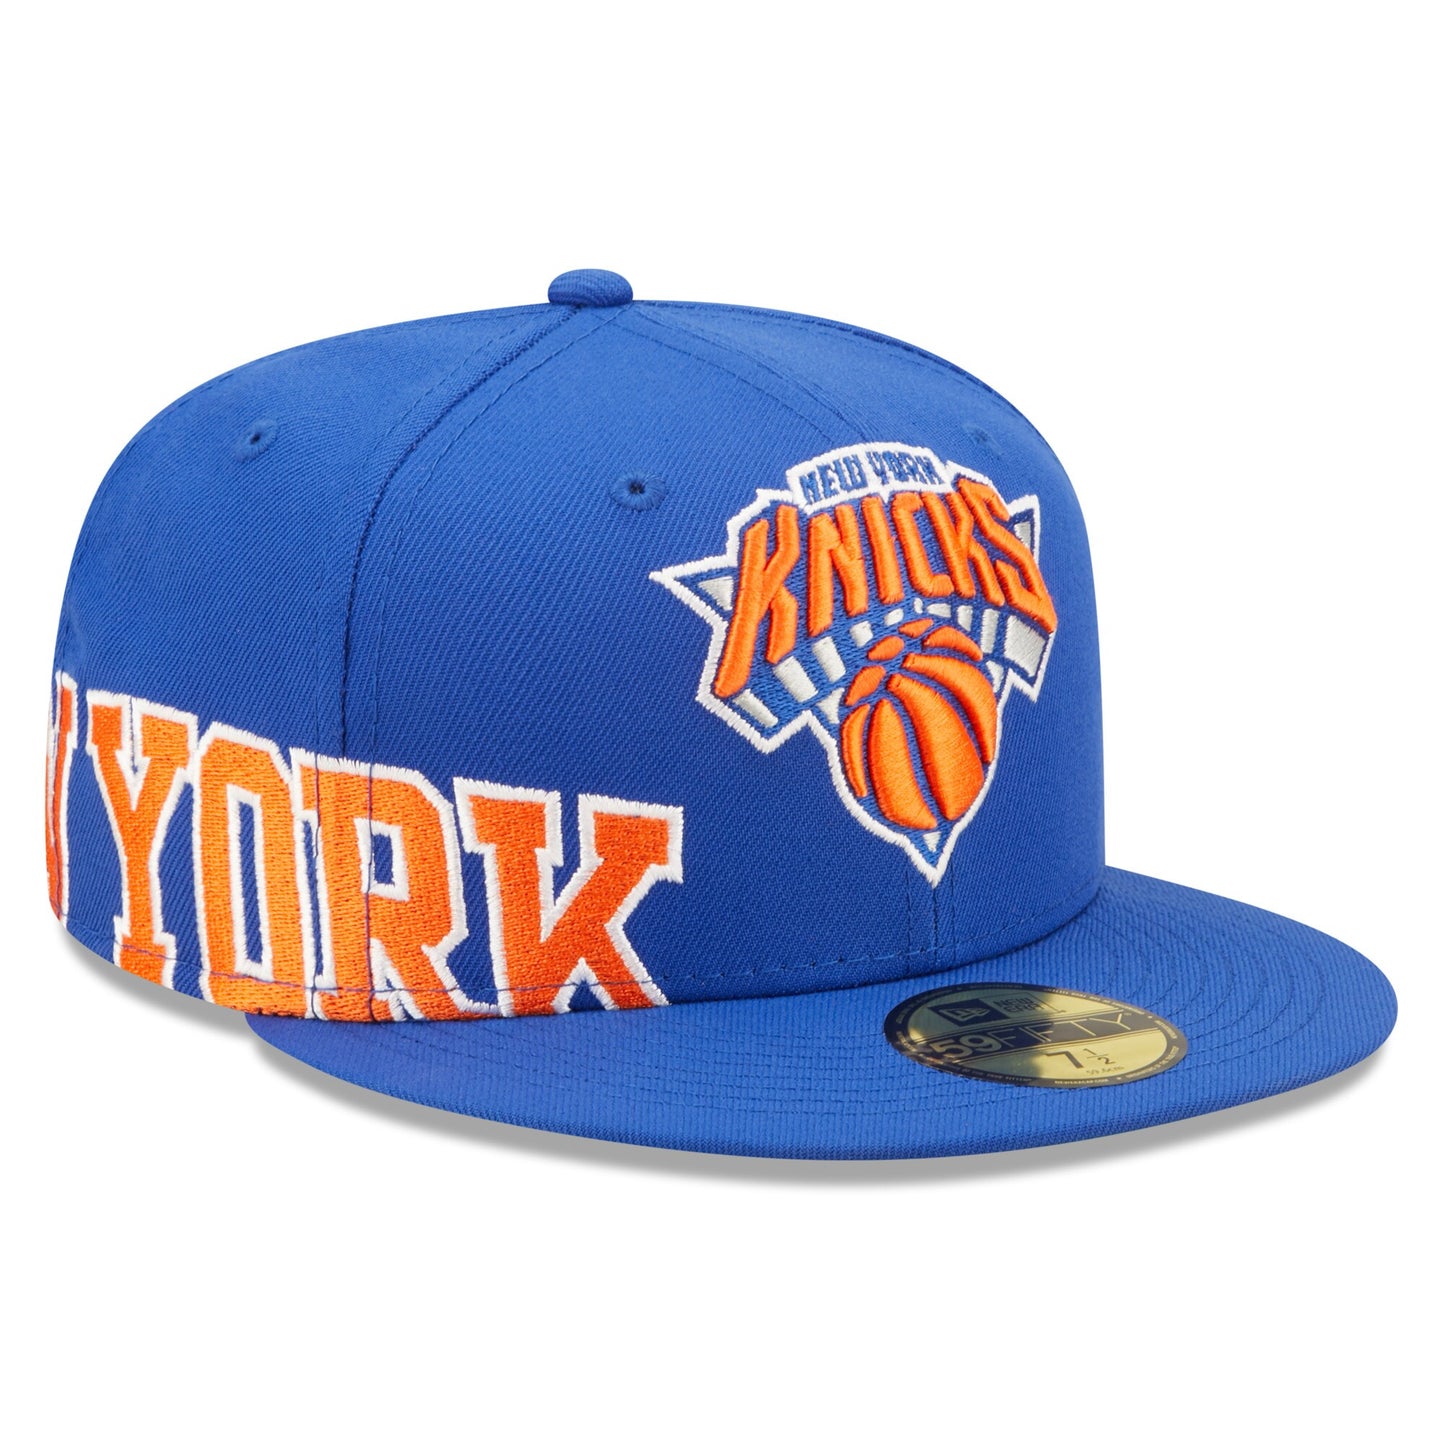 New York Knicks New Era Side Split 59FIFTY Fitted Hat - Blue